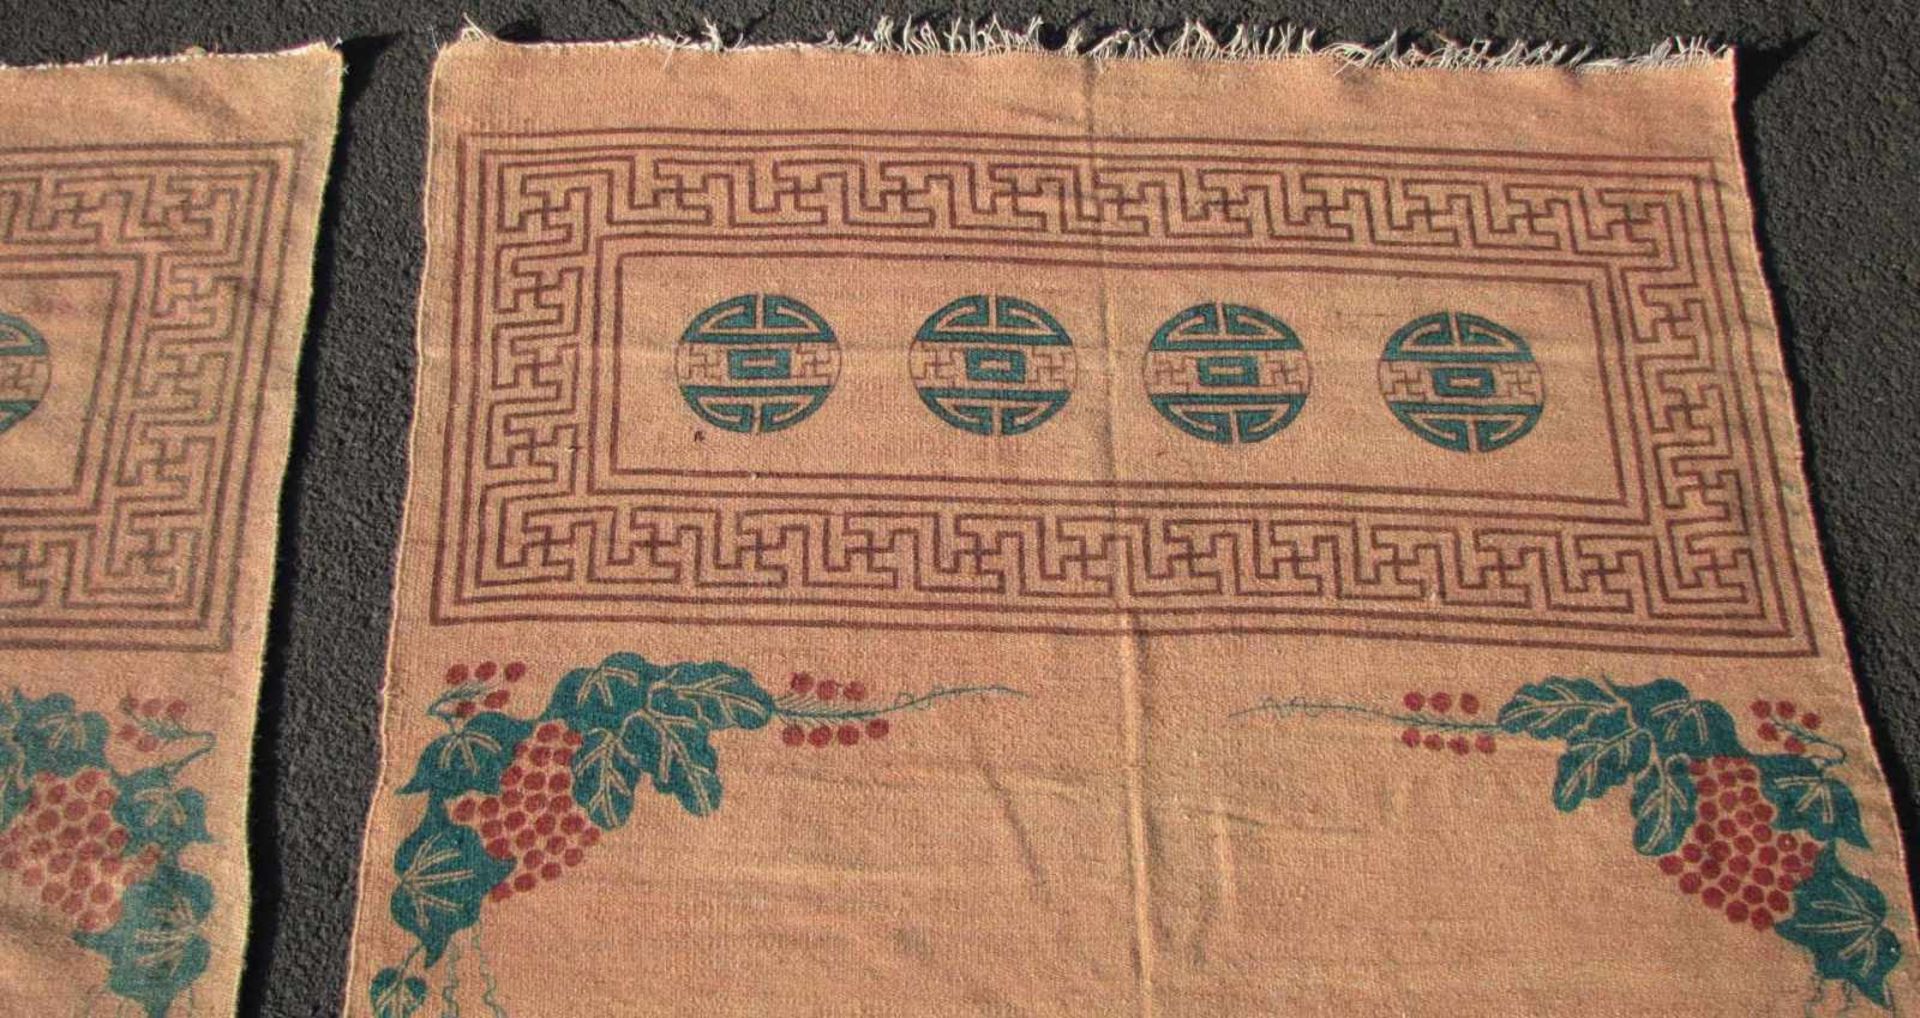 Wandbehänge. China / Mongolei. Antik, um 1900. Circa 296 cm x 114 cm. Handgewebt. Wolle auf - Bild 8 aus 8